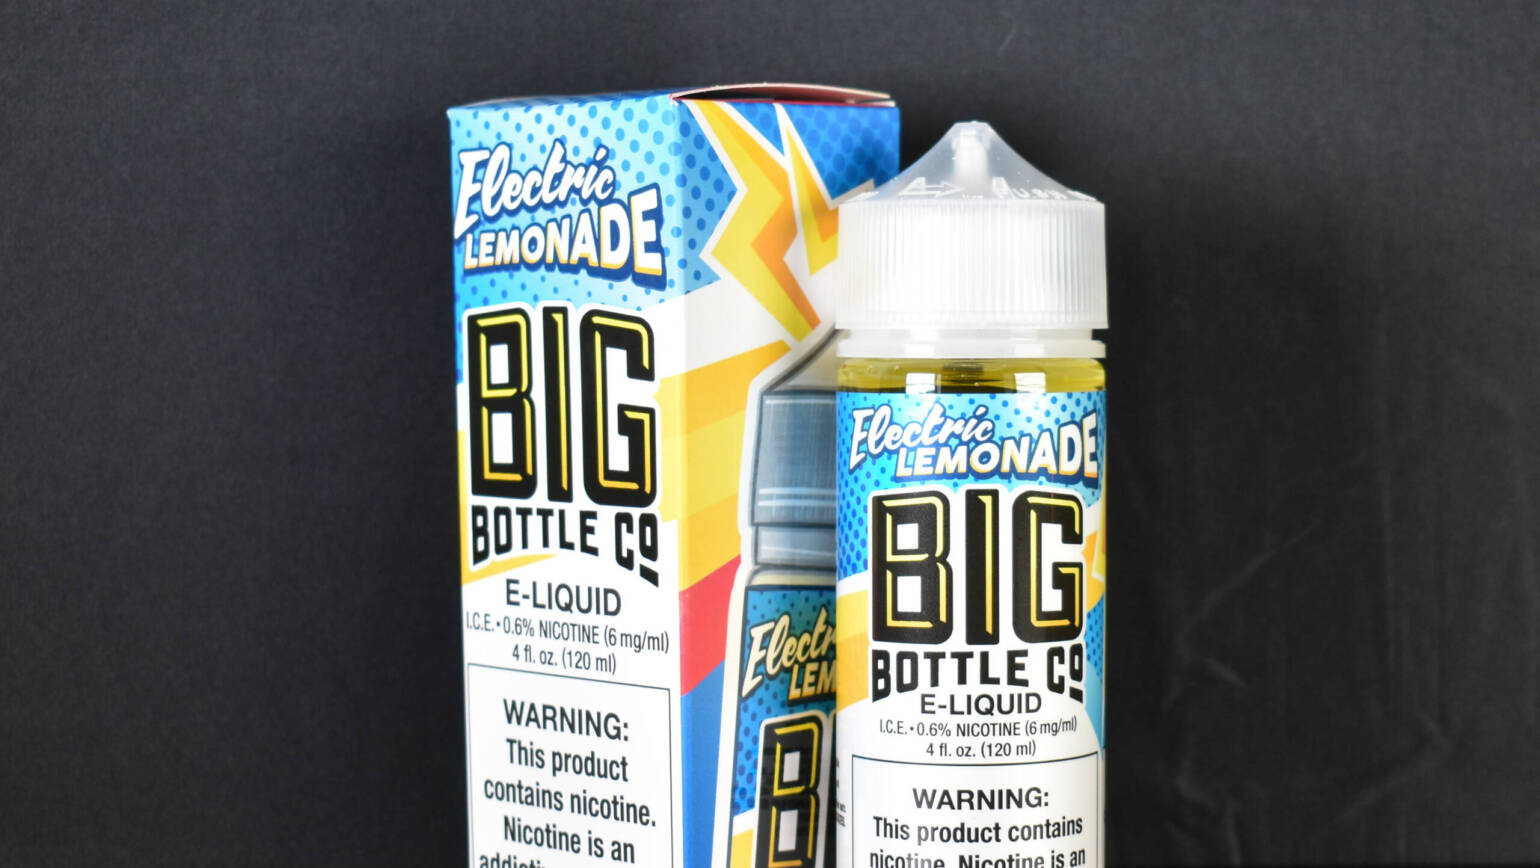 Big Bottle Co – Electric Lemonade